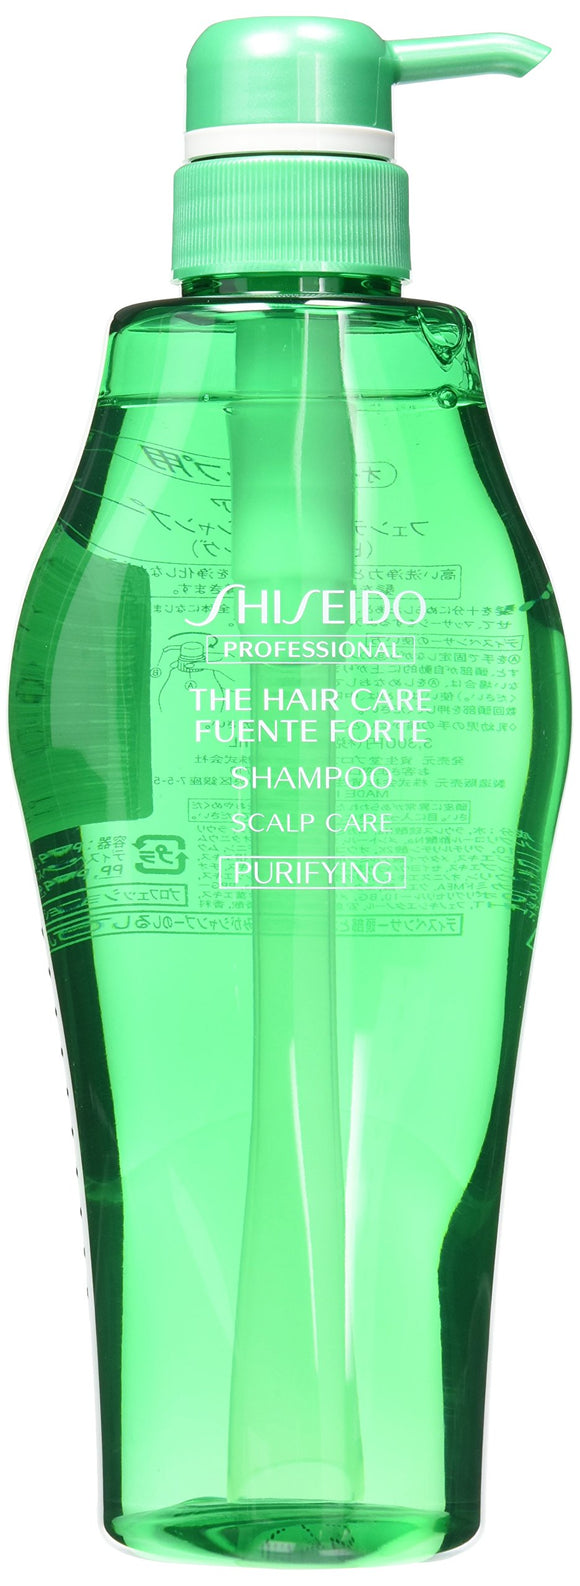 fenteforute Shampoo (pyurifaingu) 500ml